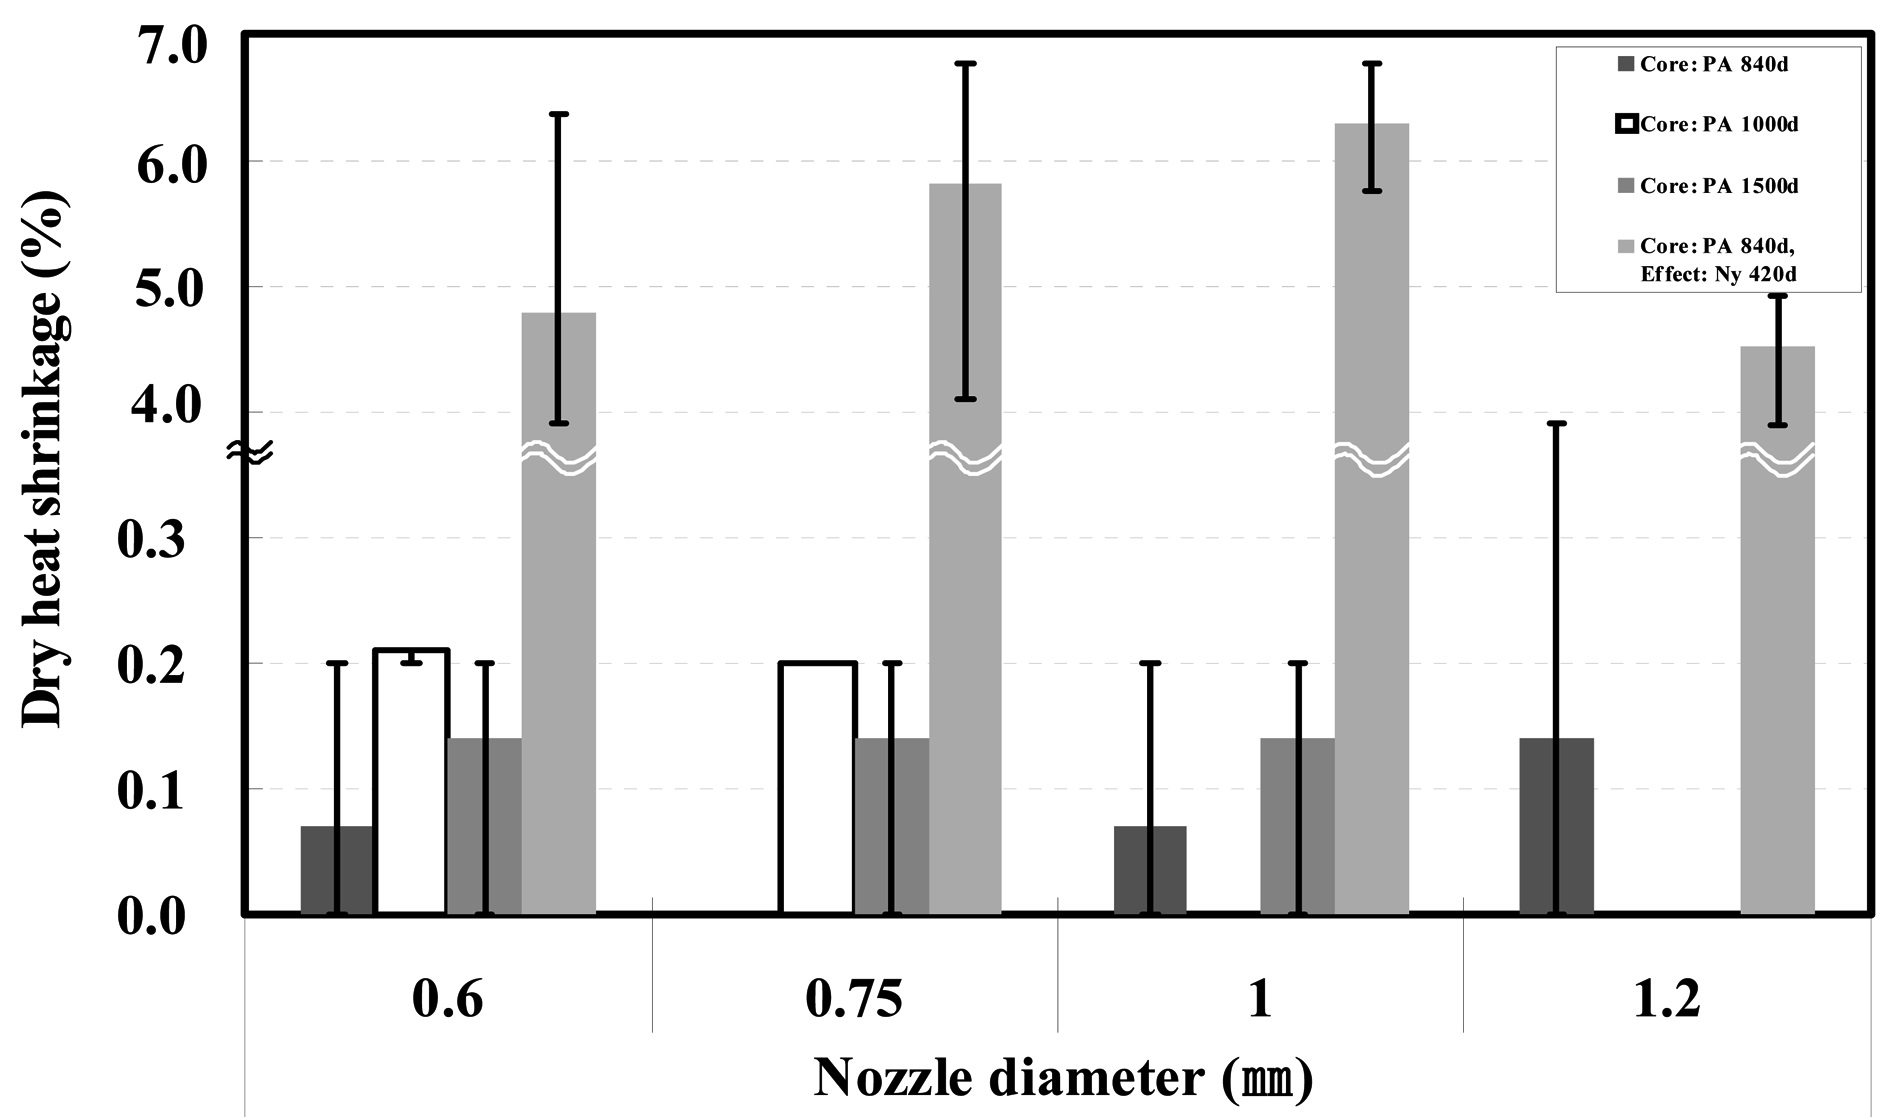 Dry heat shrinkage of specimens according to the ATY nozzle diameter.